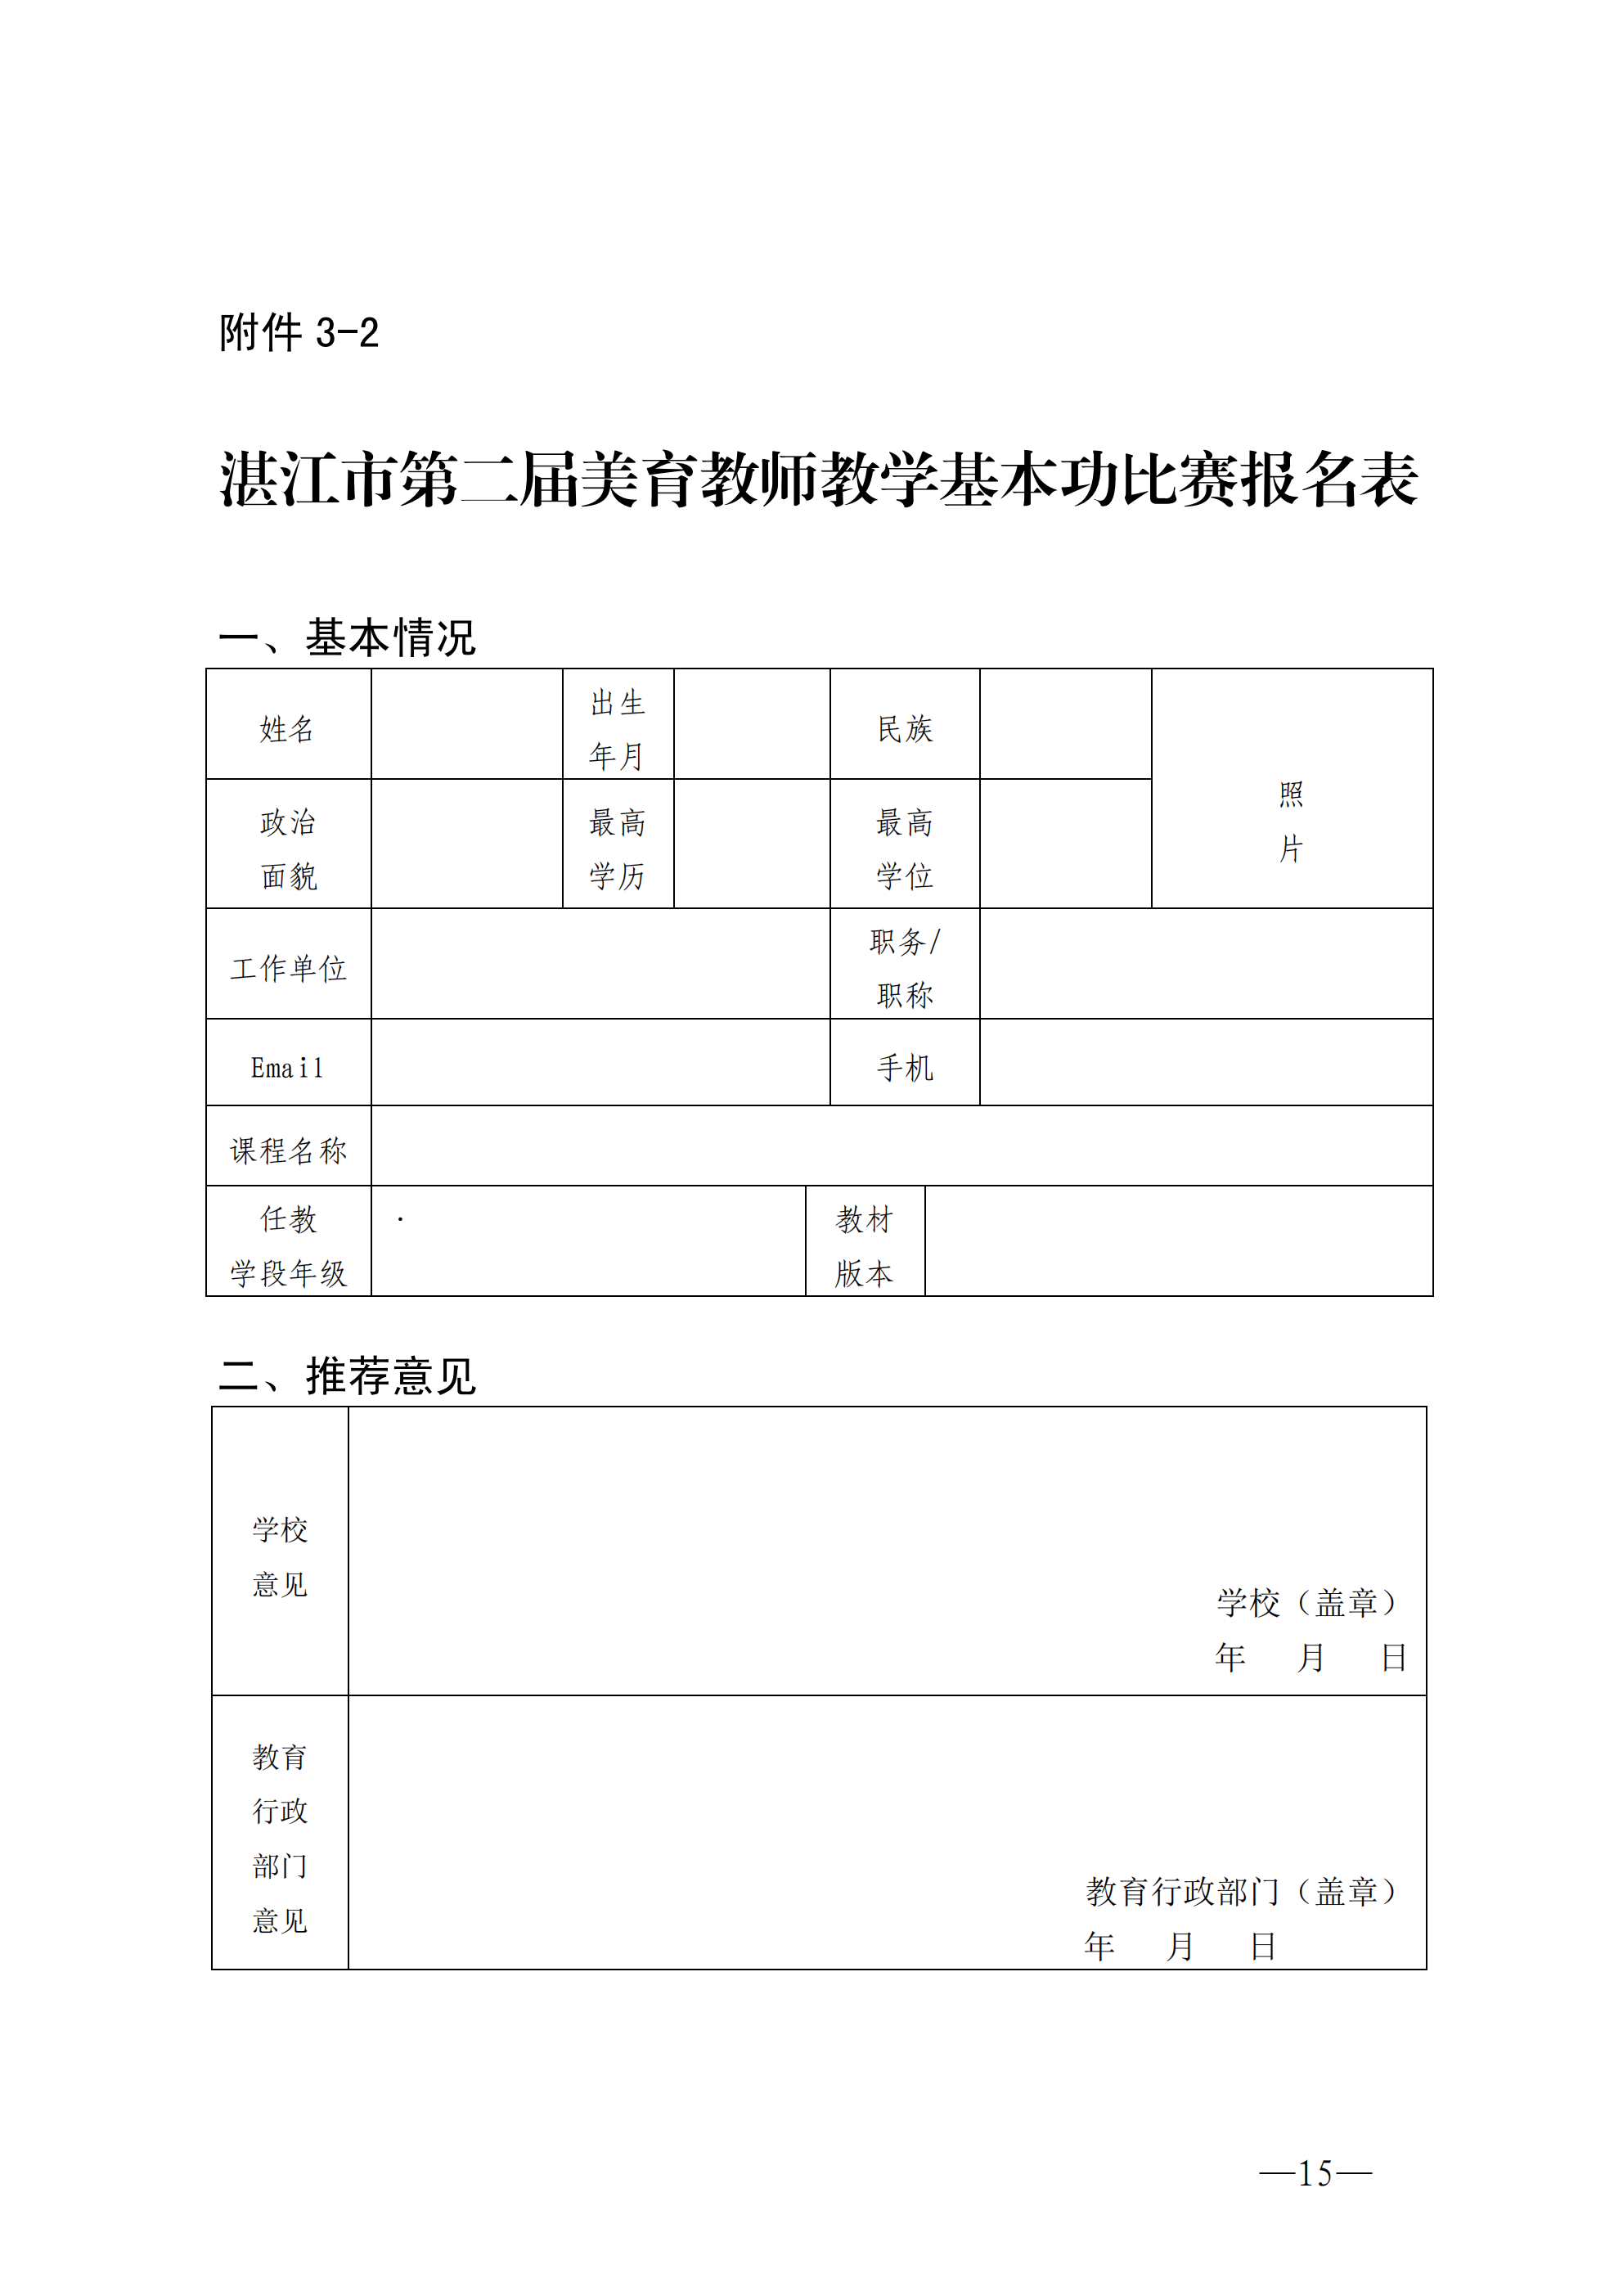 w642湛江市教育局关于举办全市第二届美育教师教学基本功比赛的通知_14.png